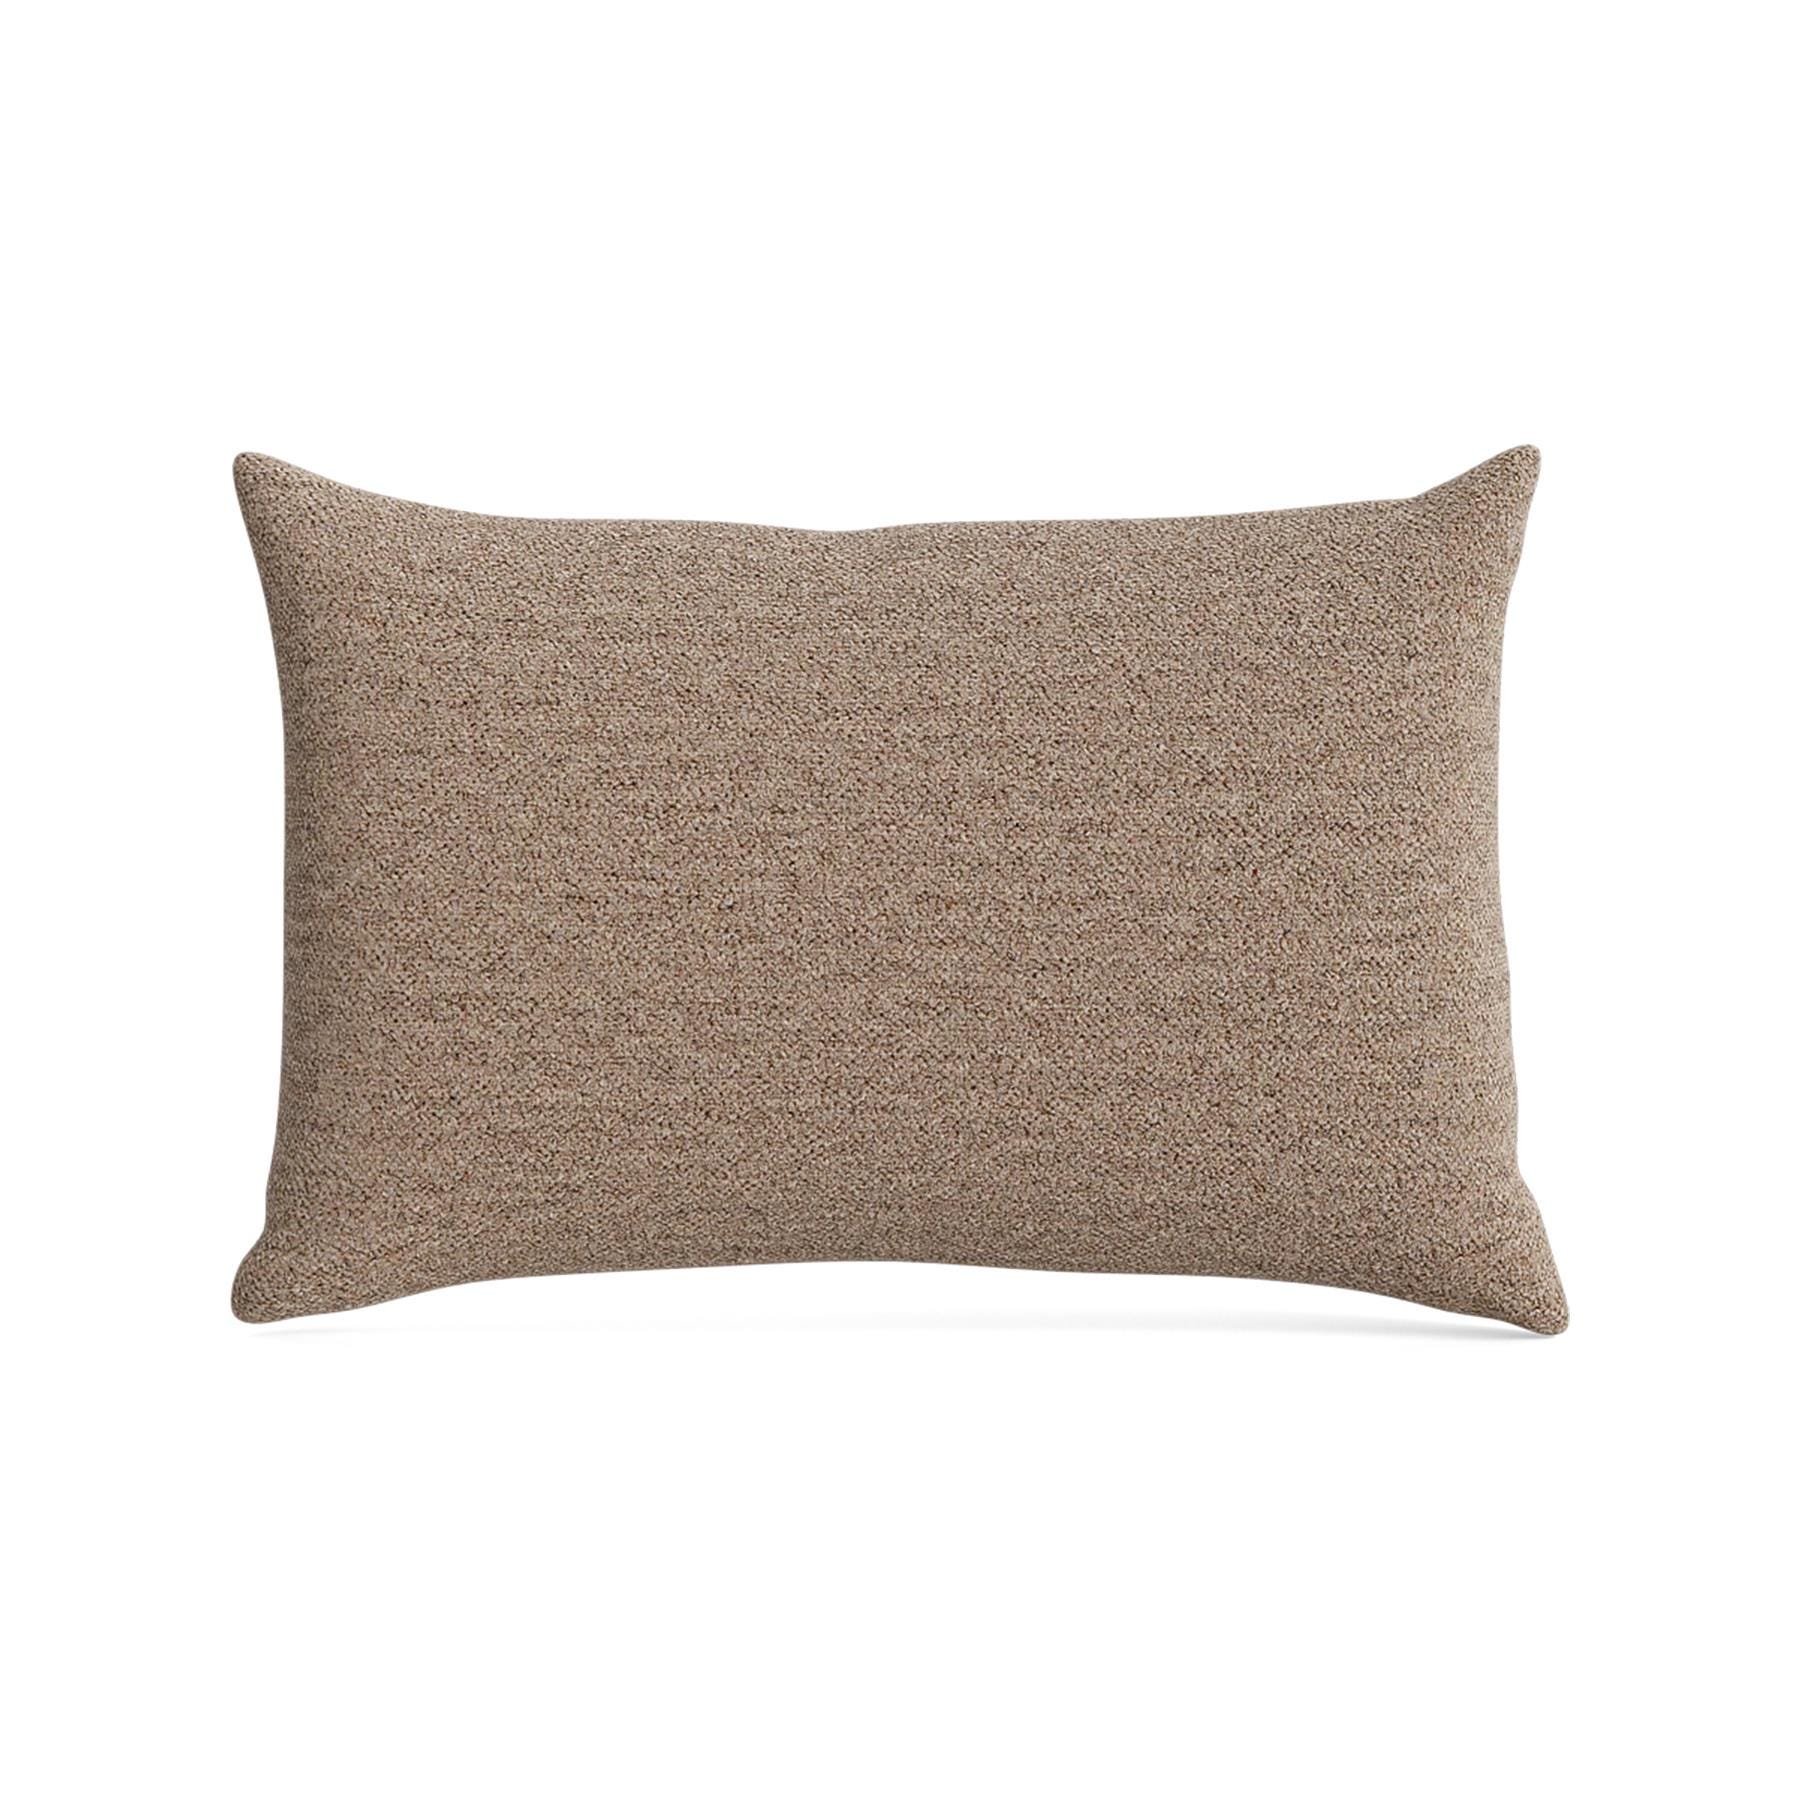 Make Nordic Pillow 40cmx60cm Nature Boucle 04 Down And Fibers Brown